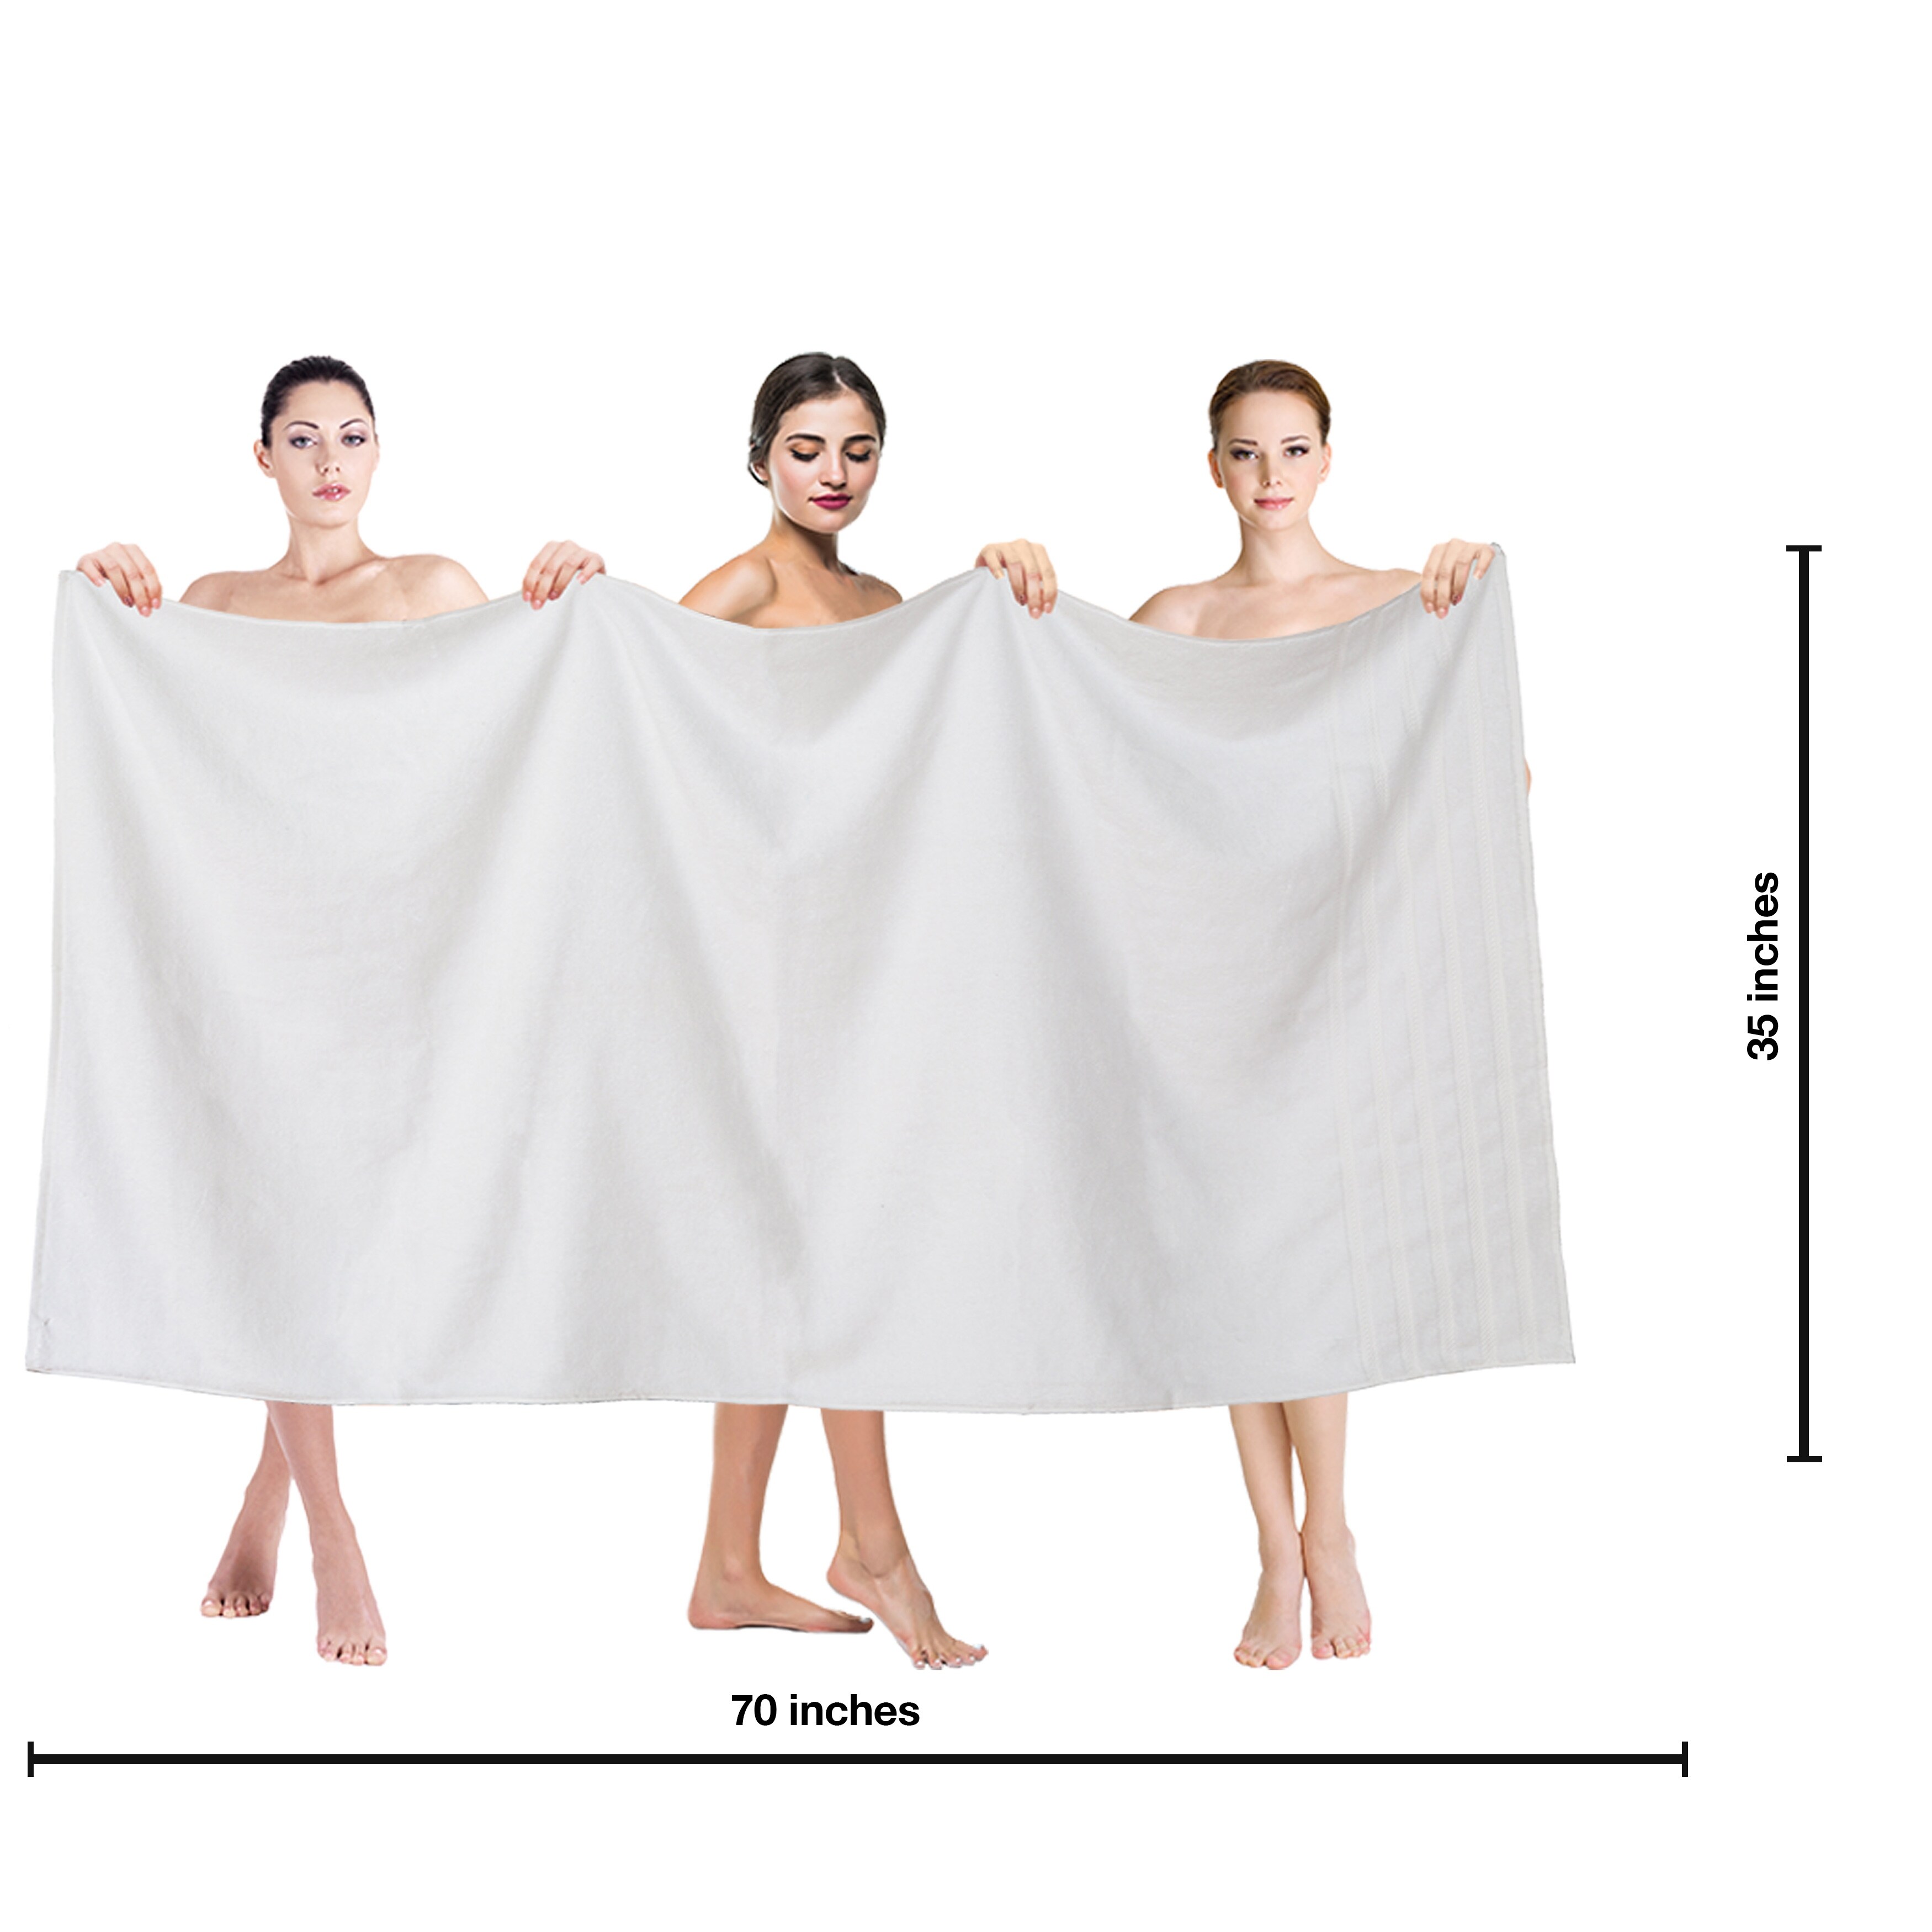 2 Piece New Large Bath Sheet Resort Pool Luxury Towels in 35 x 70 inch. Beach